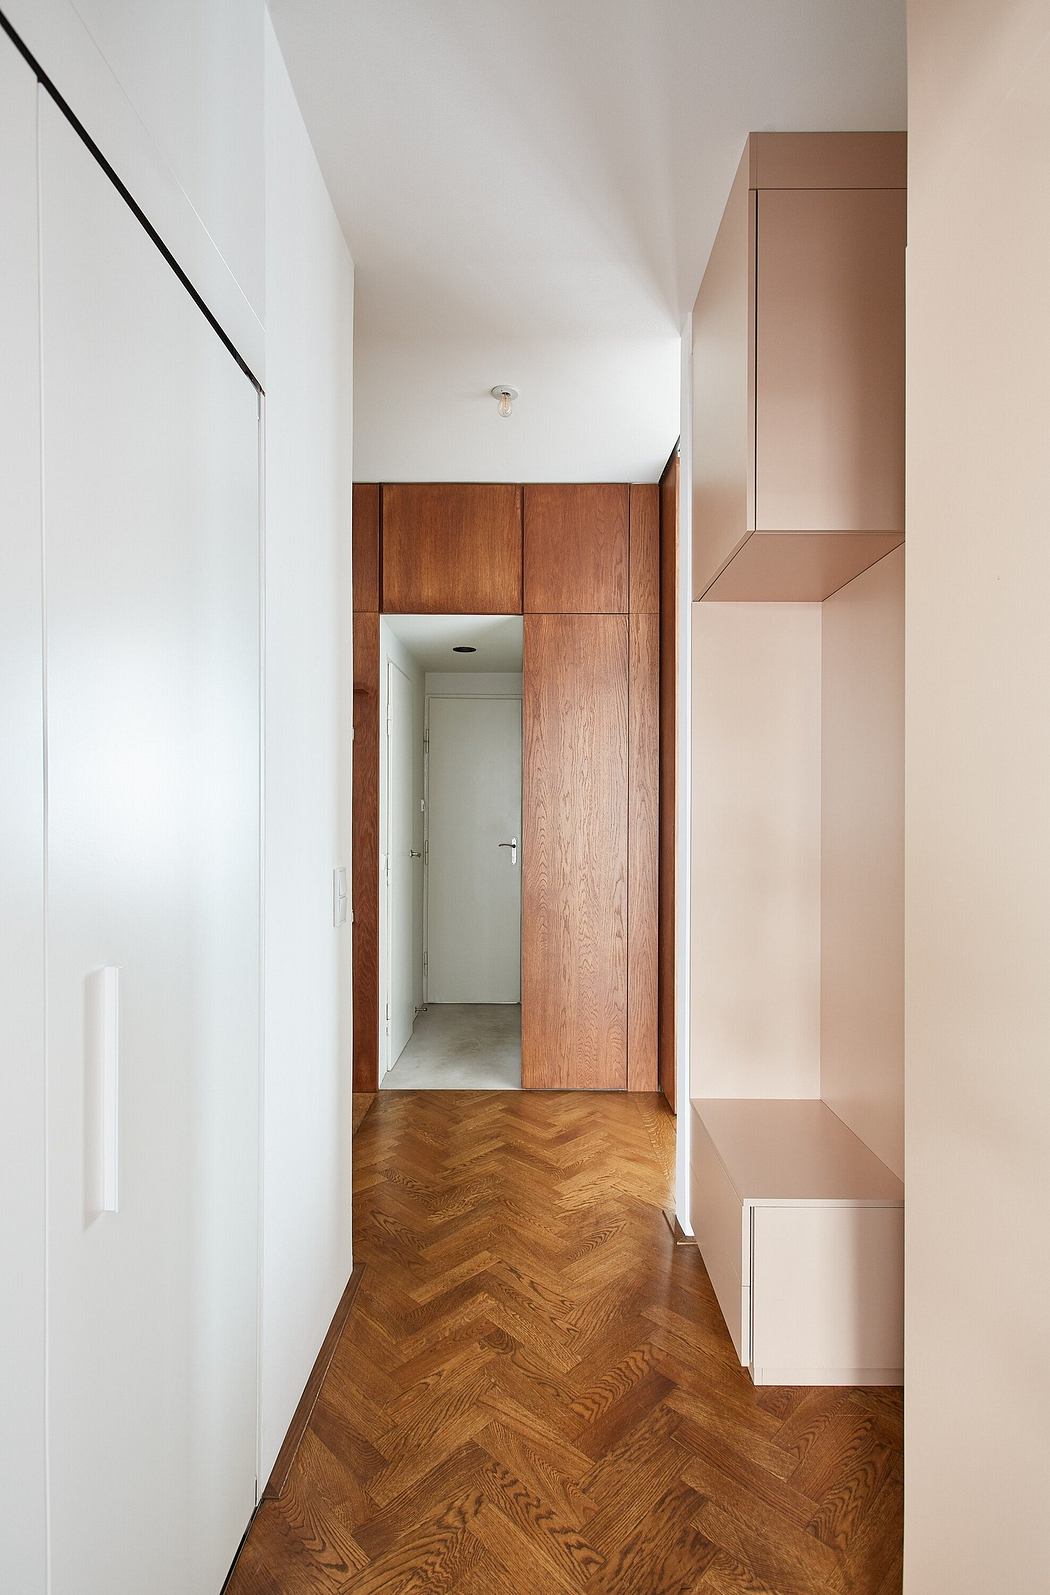 Minimalist hallway with herringbone floor and wooden accents.